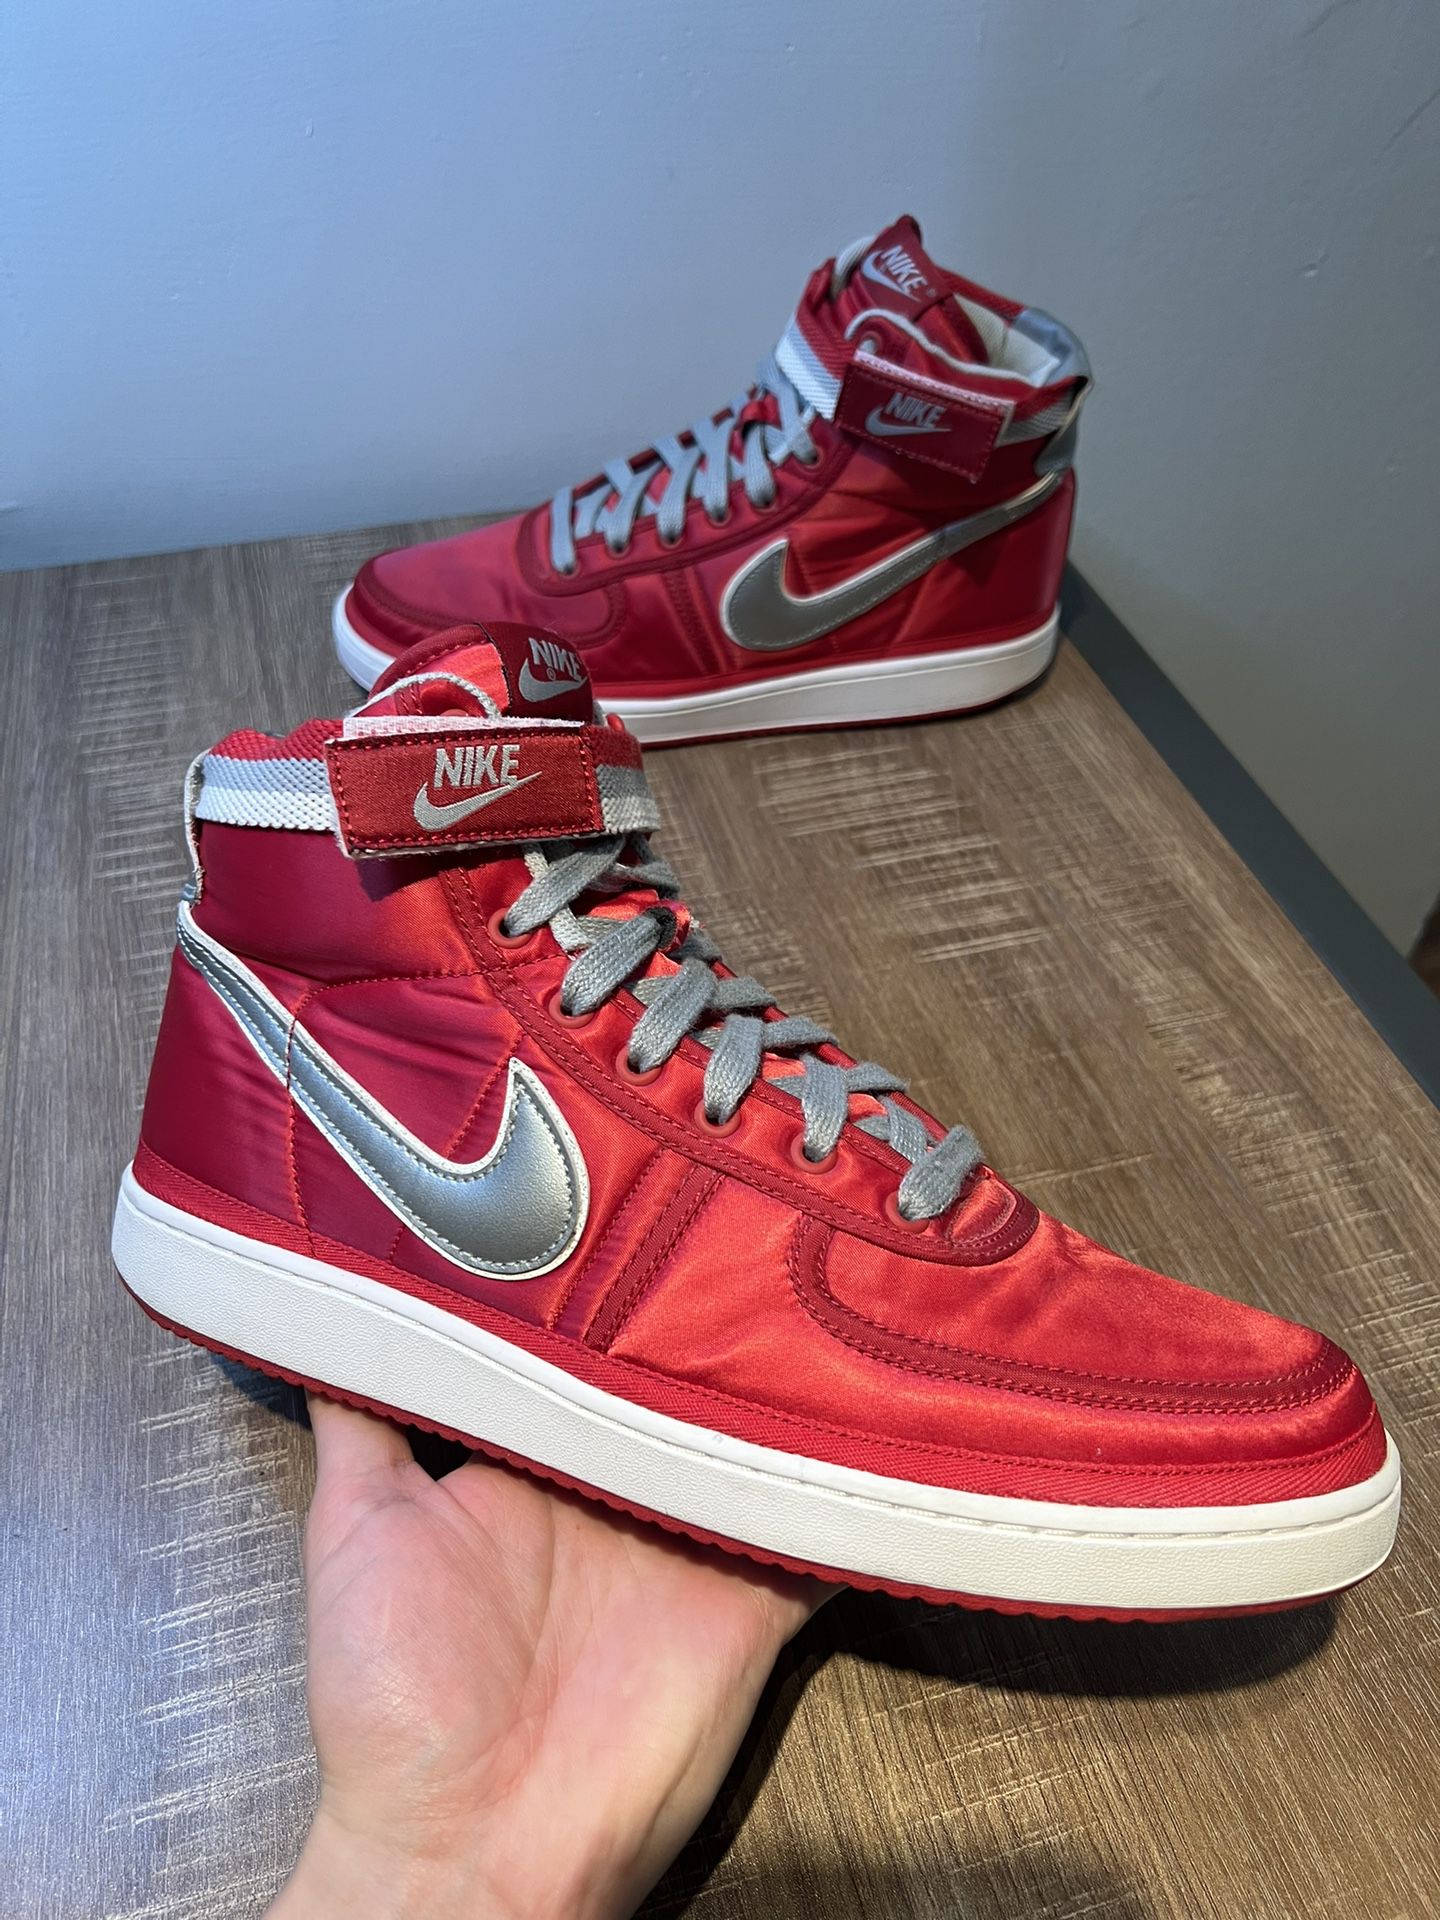 Nike Shoes 2018 Vandal High Supreme Metallic Red - Sz 12 Mens Silver White